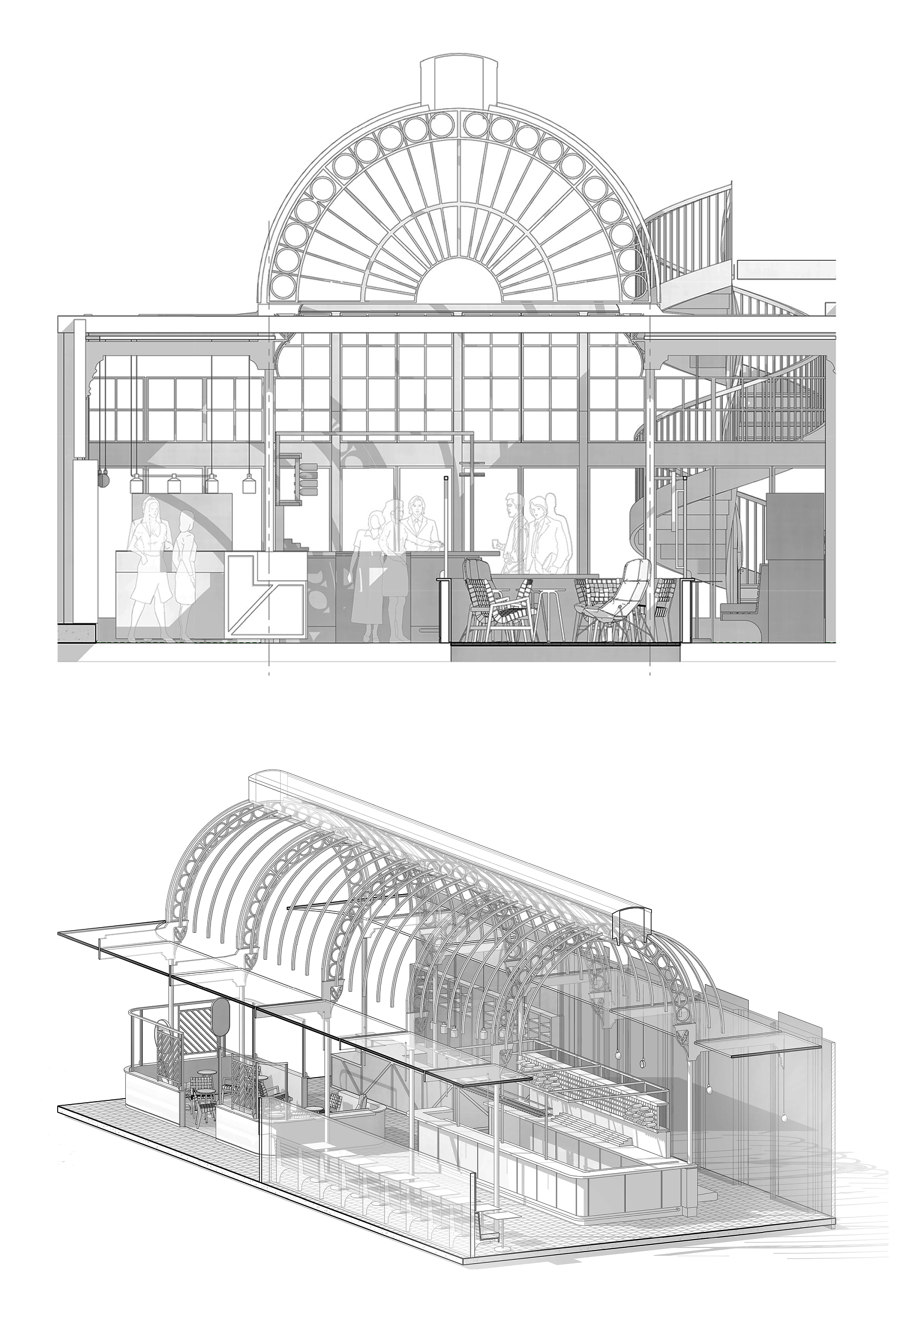 Whitworth Manchester de Grzywinski+Pons | Diseño de hoteles